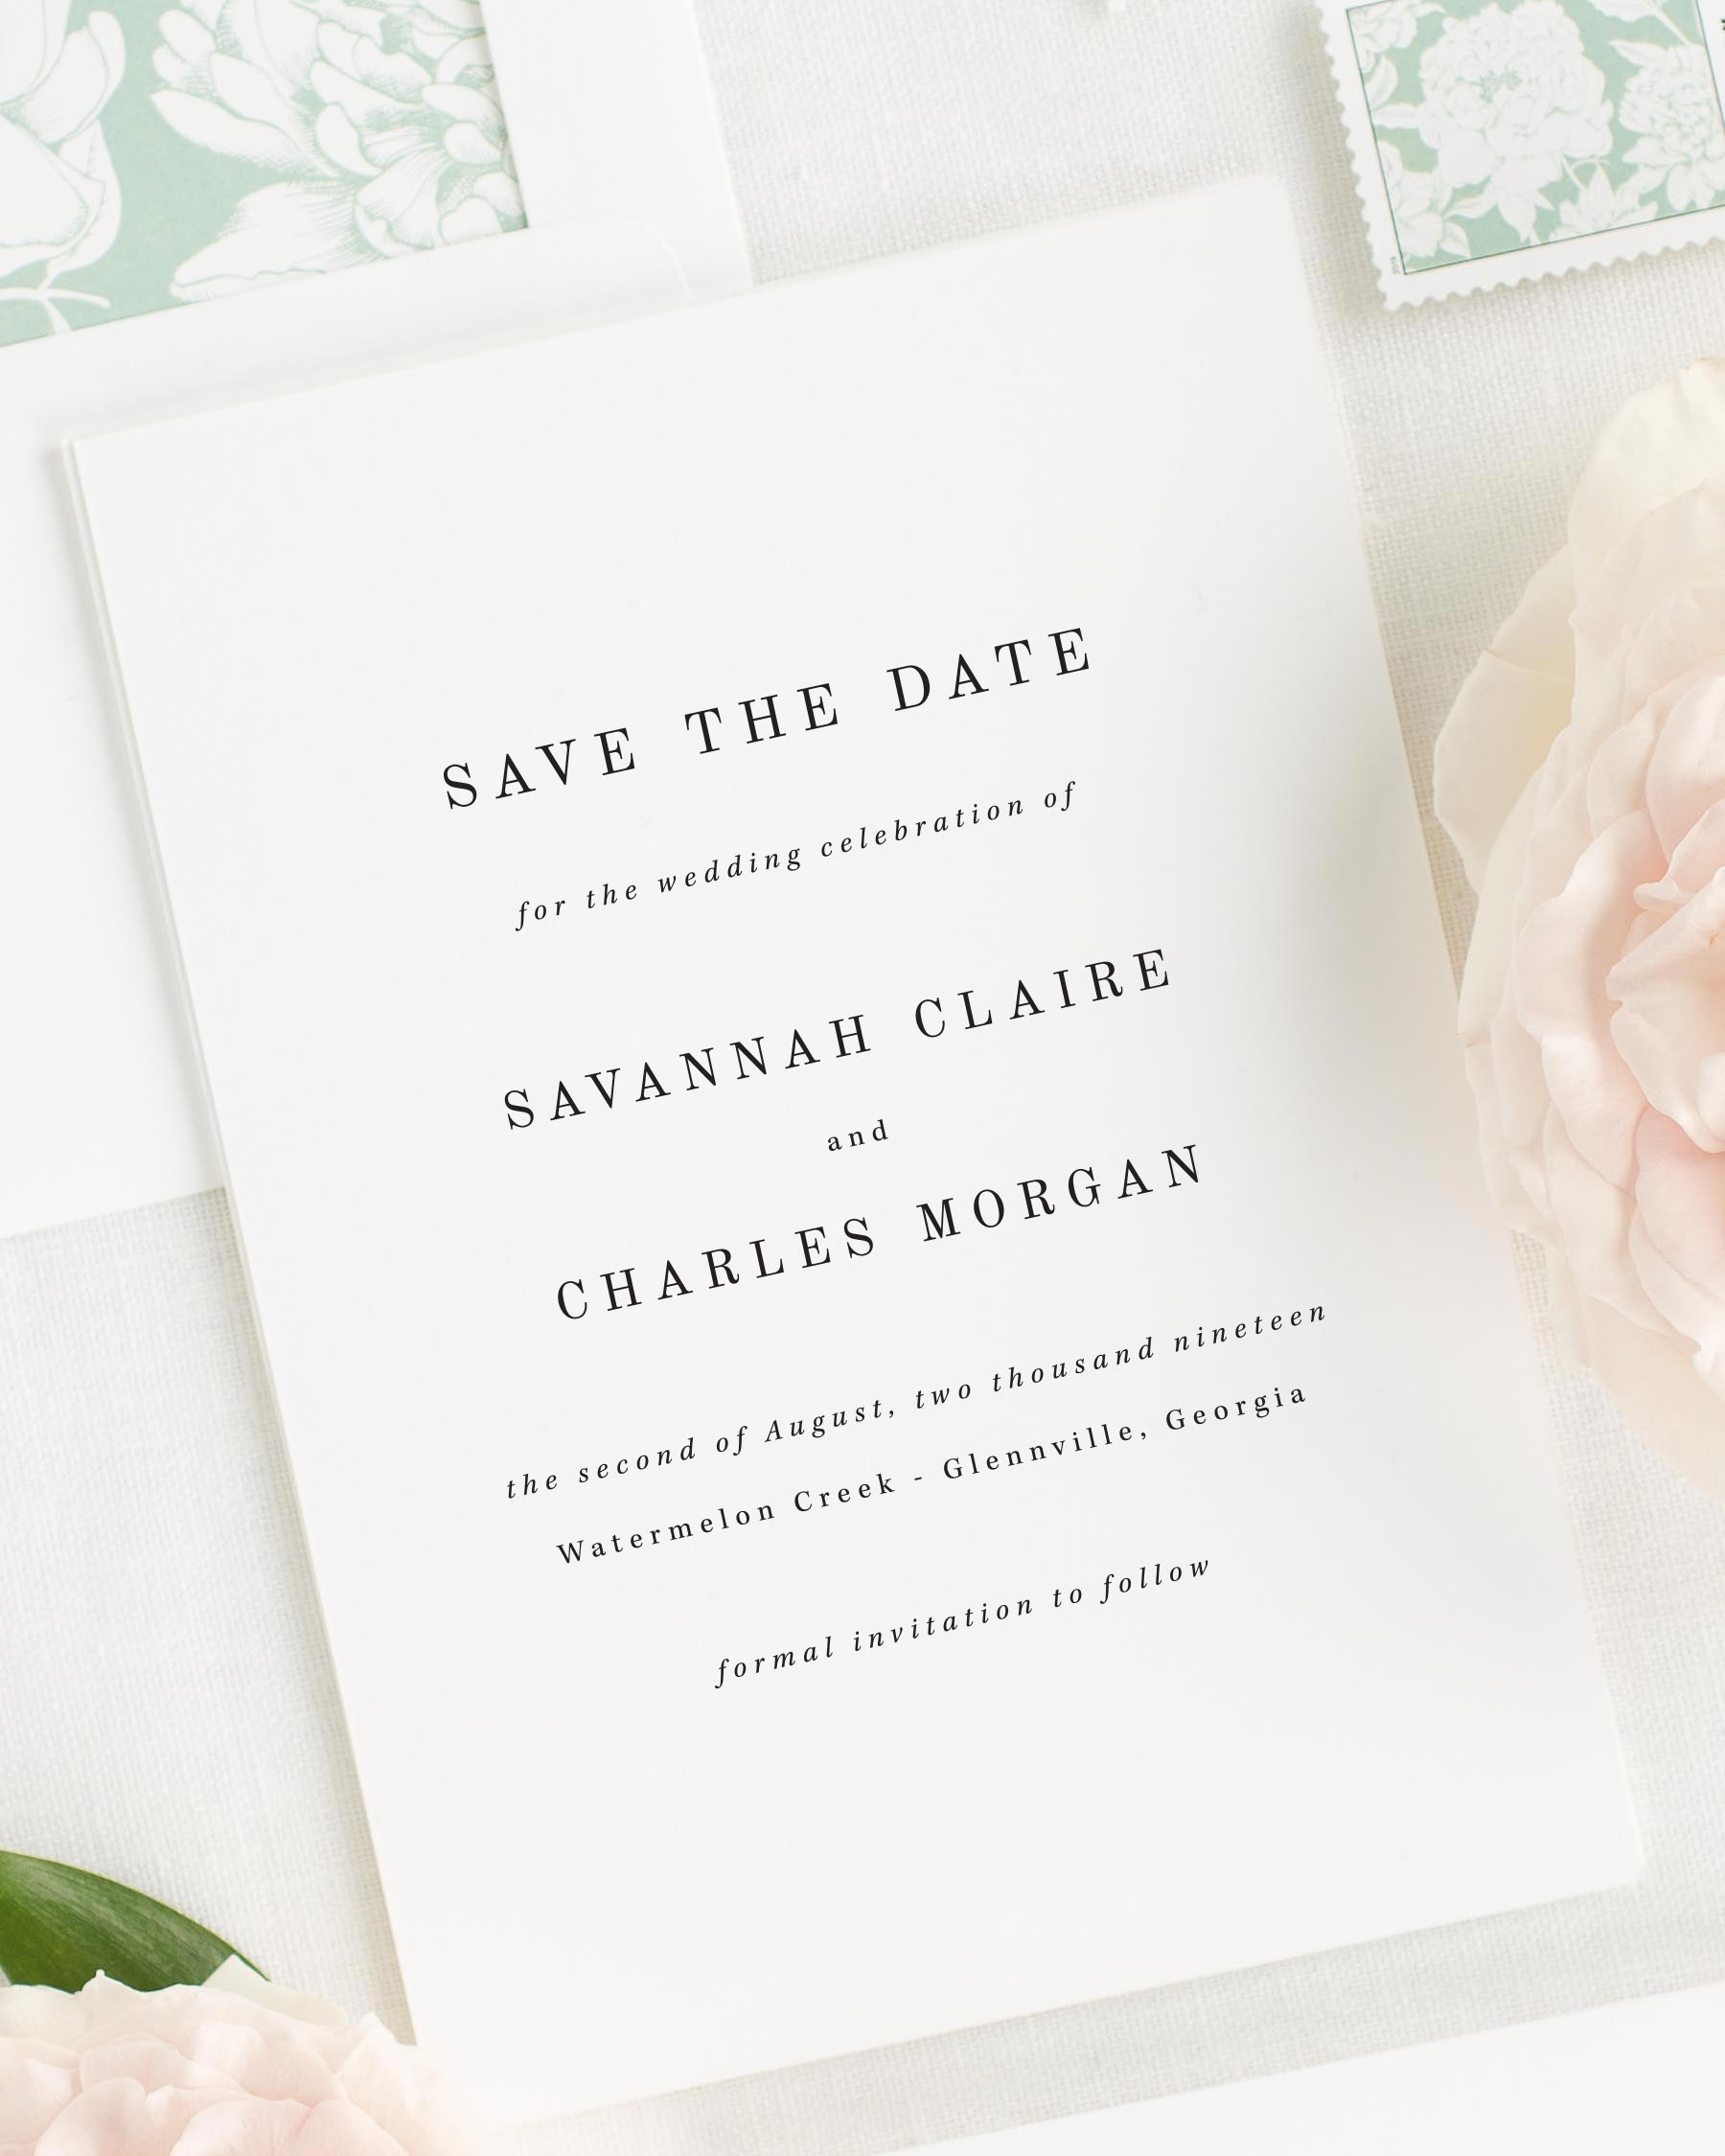 Save The Date And Wedding Invitations
 Savannah Save the Date Cards Save the Date Cards by Shine